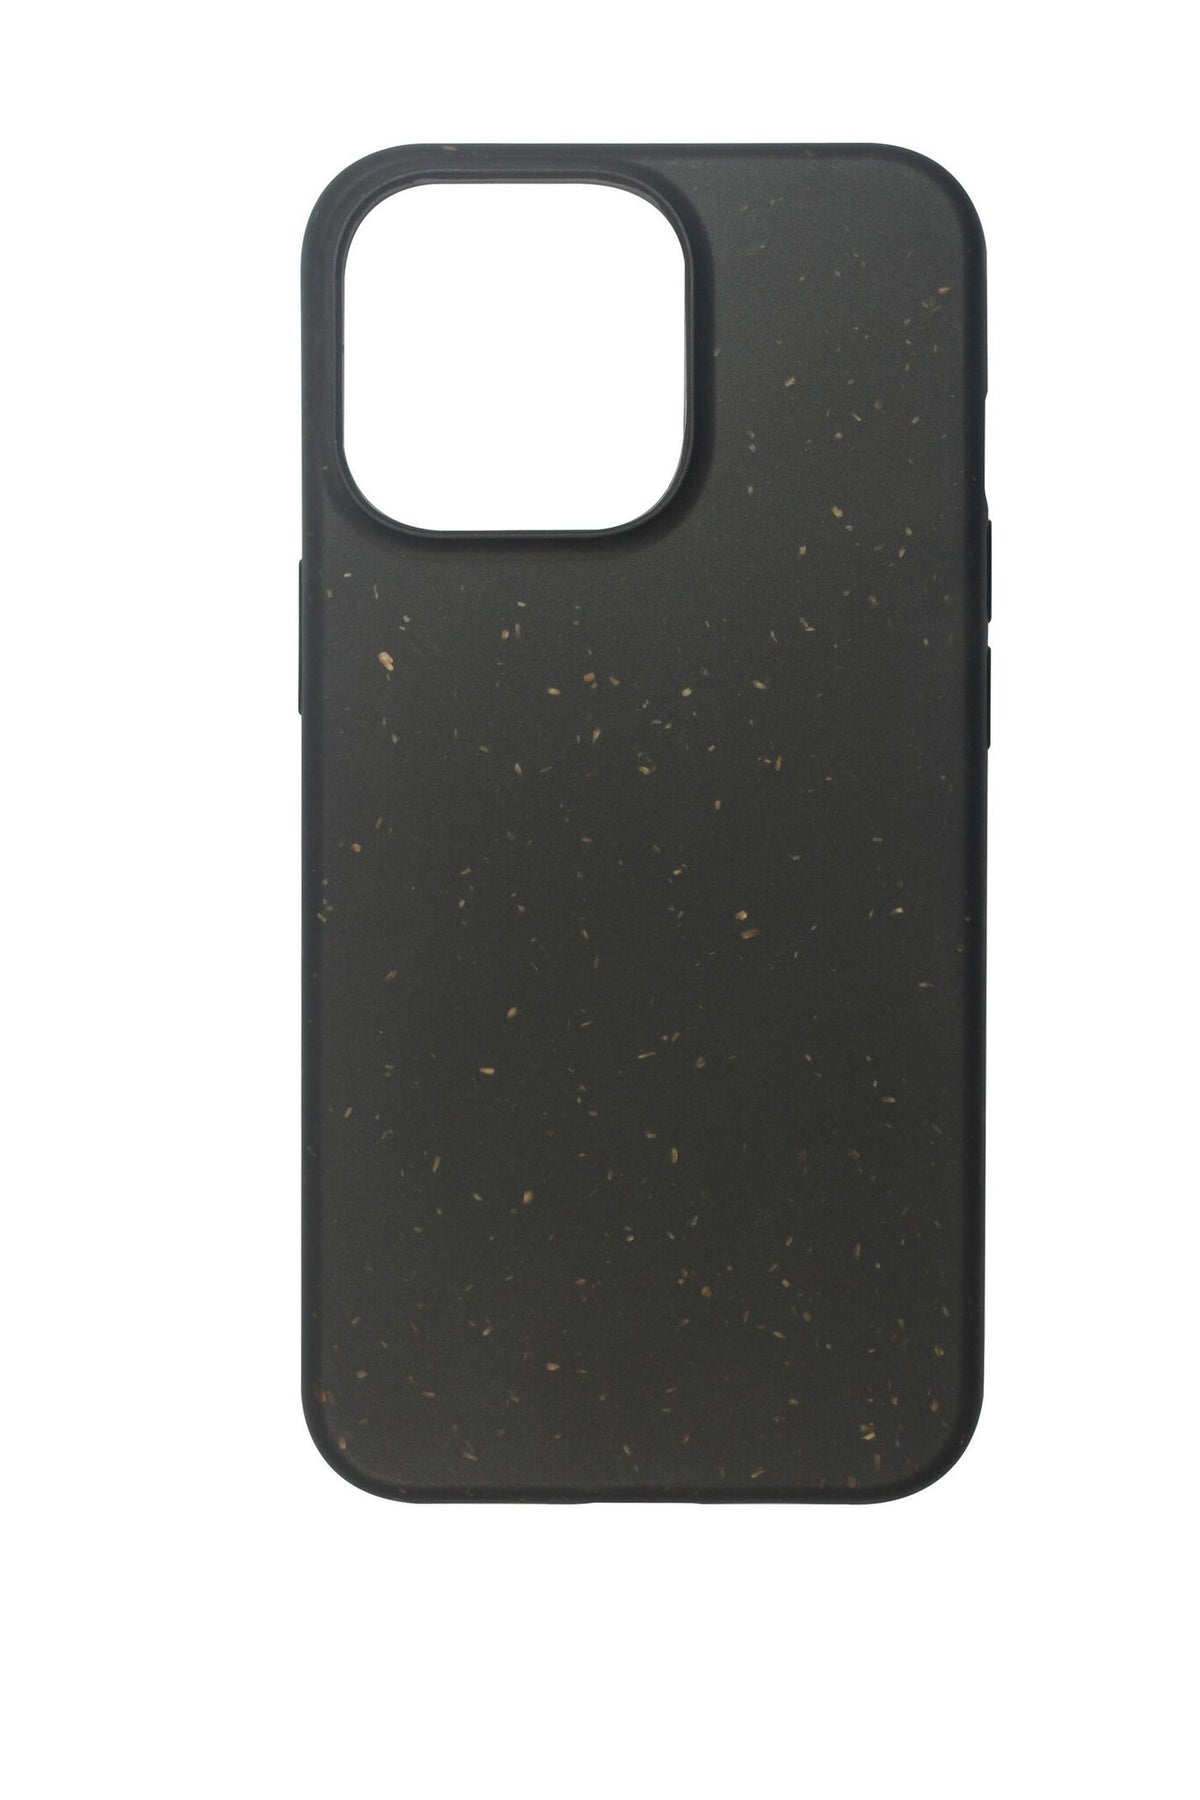 eSTUFF COPENHAGEN 100% Biodegradable mobile phone case for iPhone 13 Pro in Black